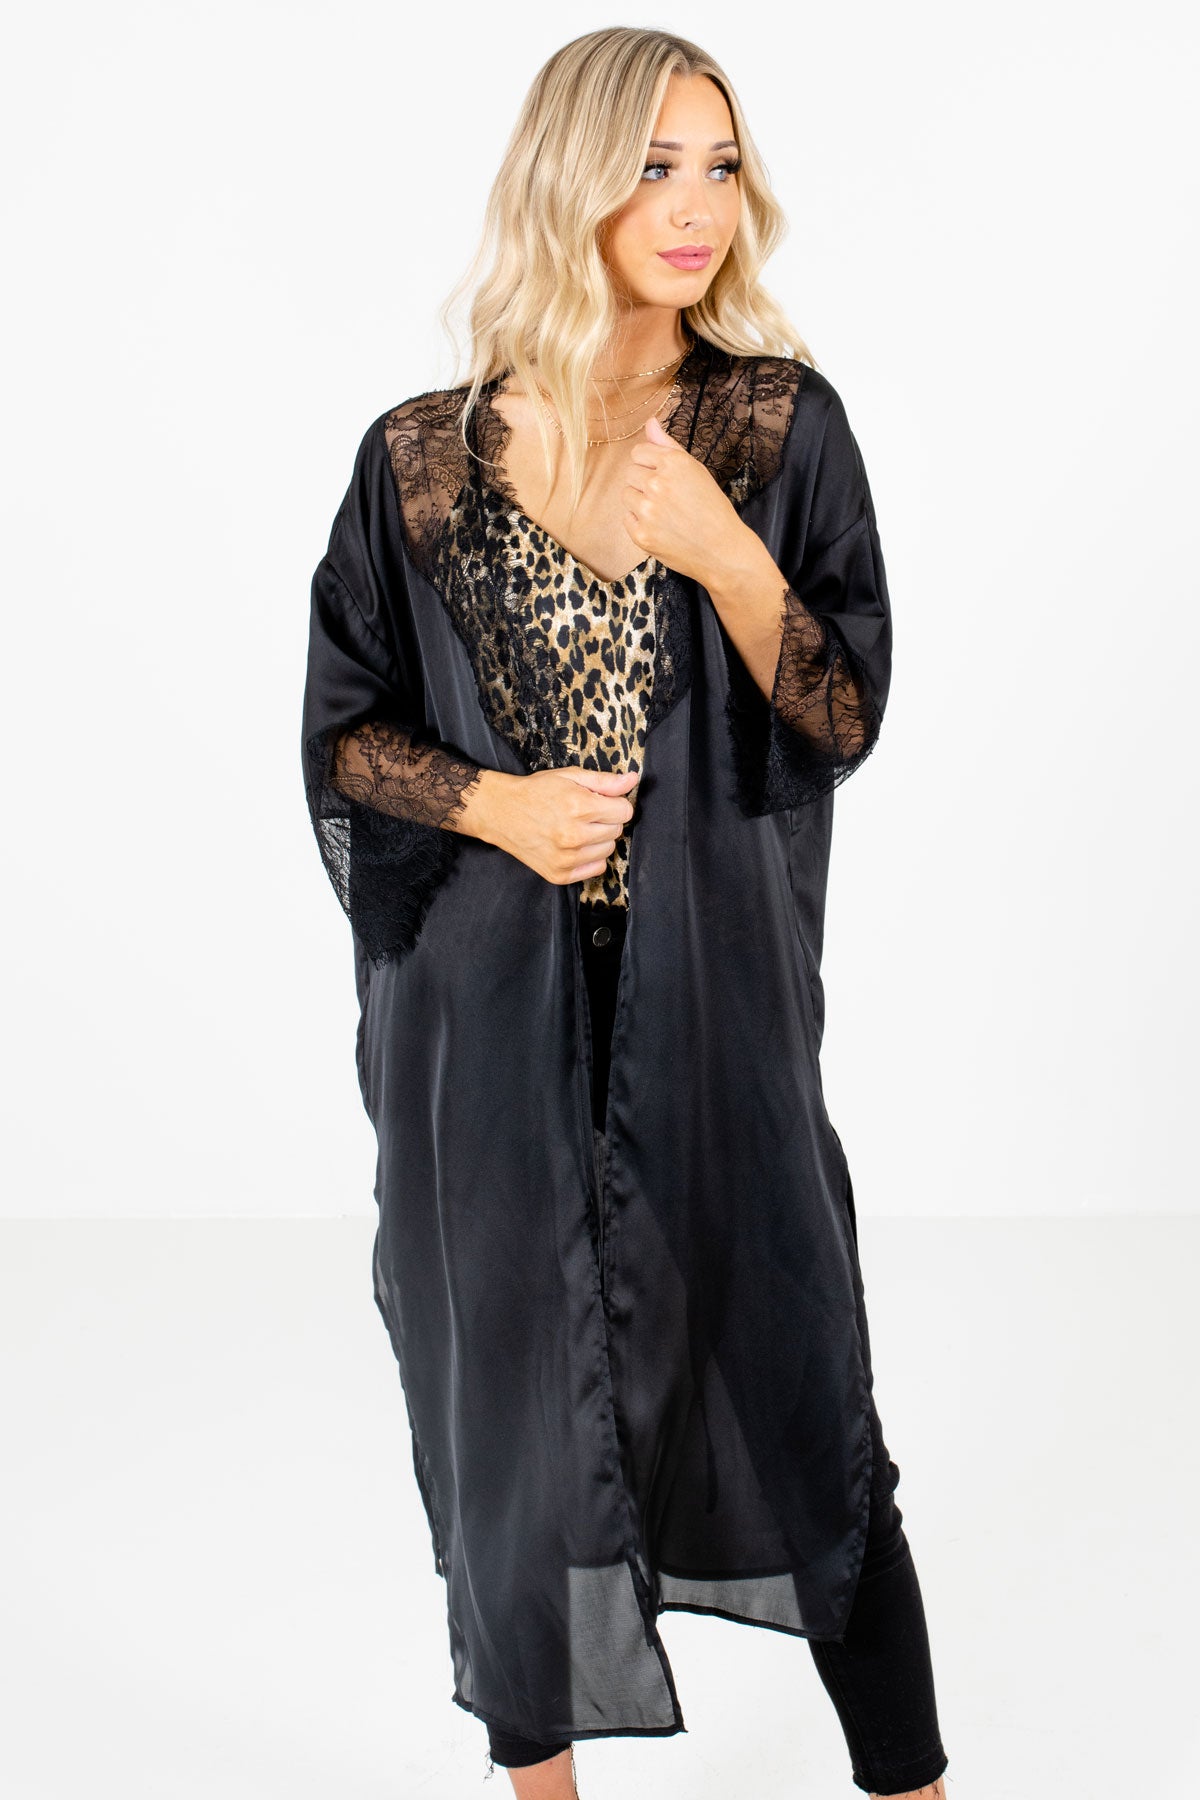 Black Lace Accented Boutique Kimonos for Women